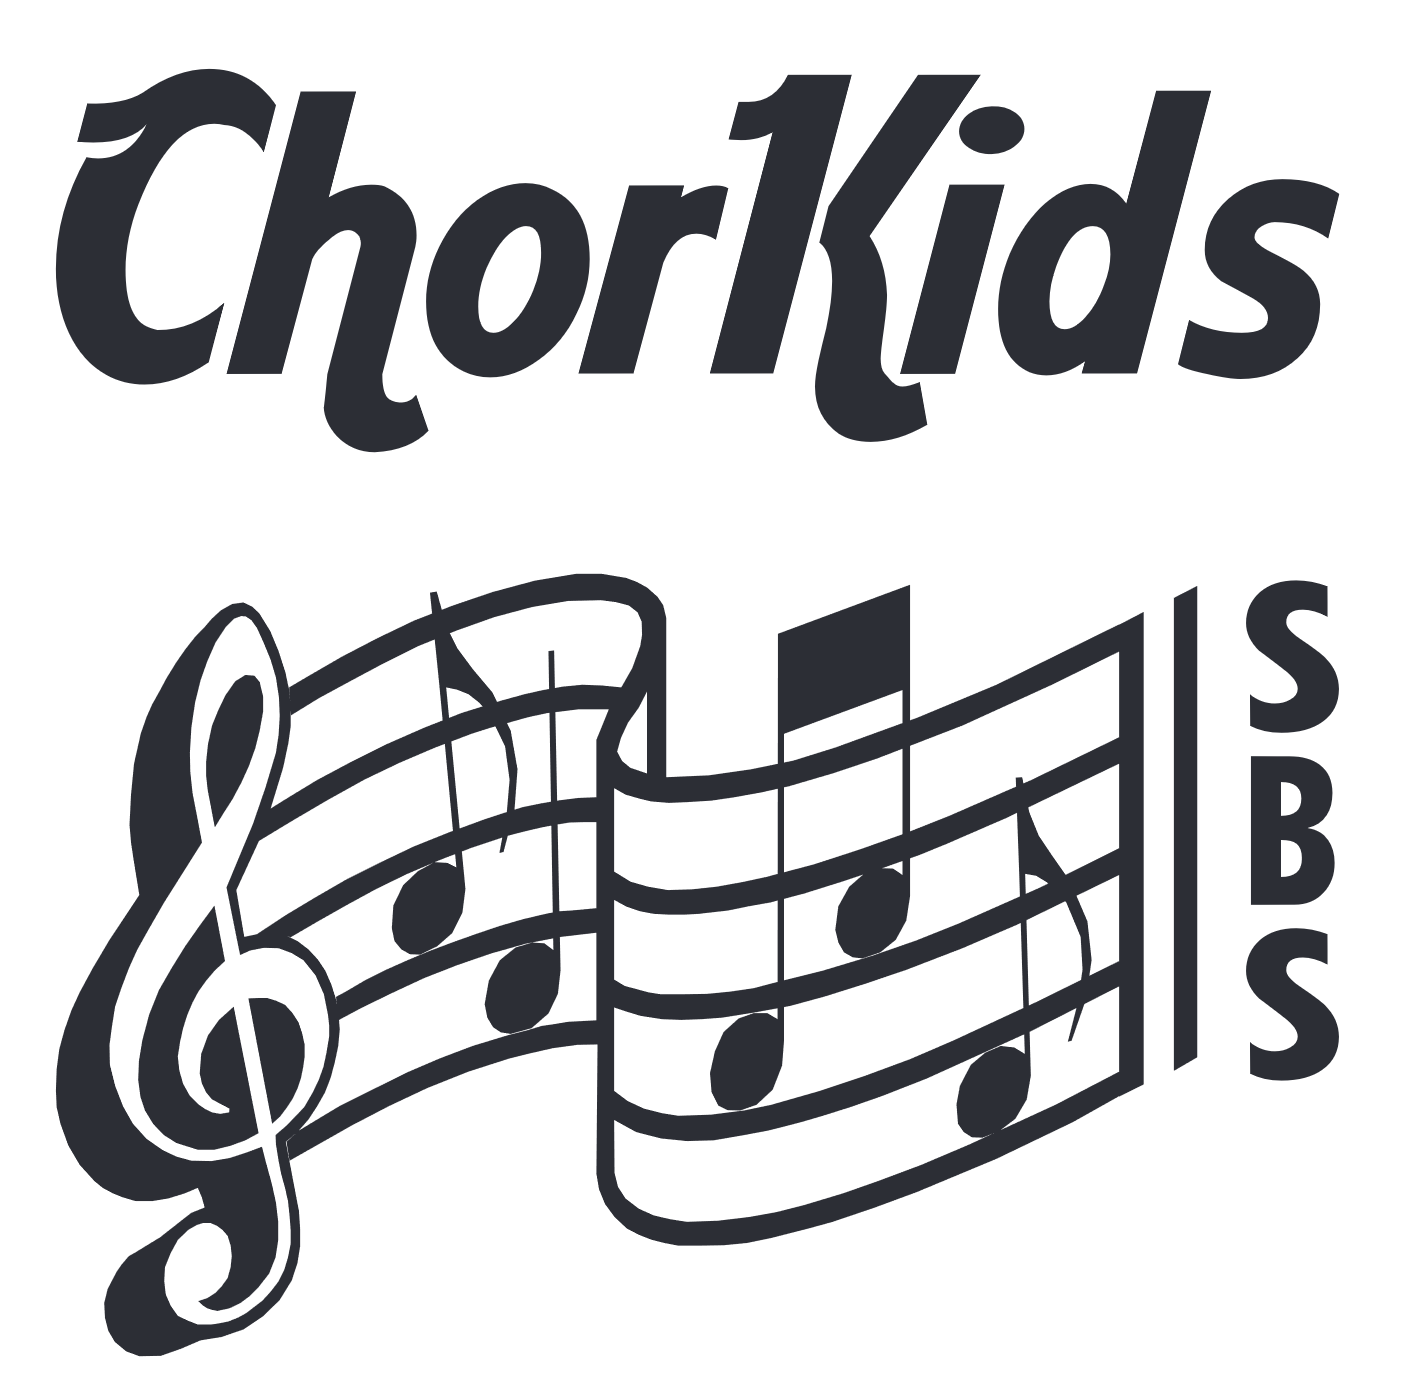 chorkids logo